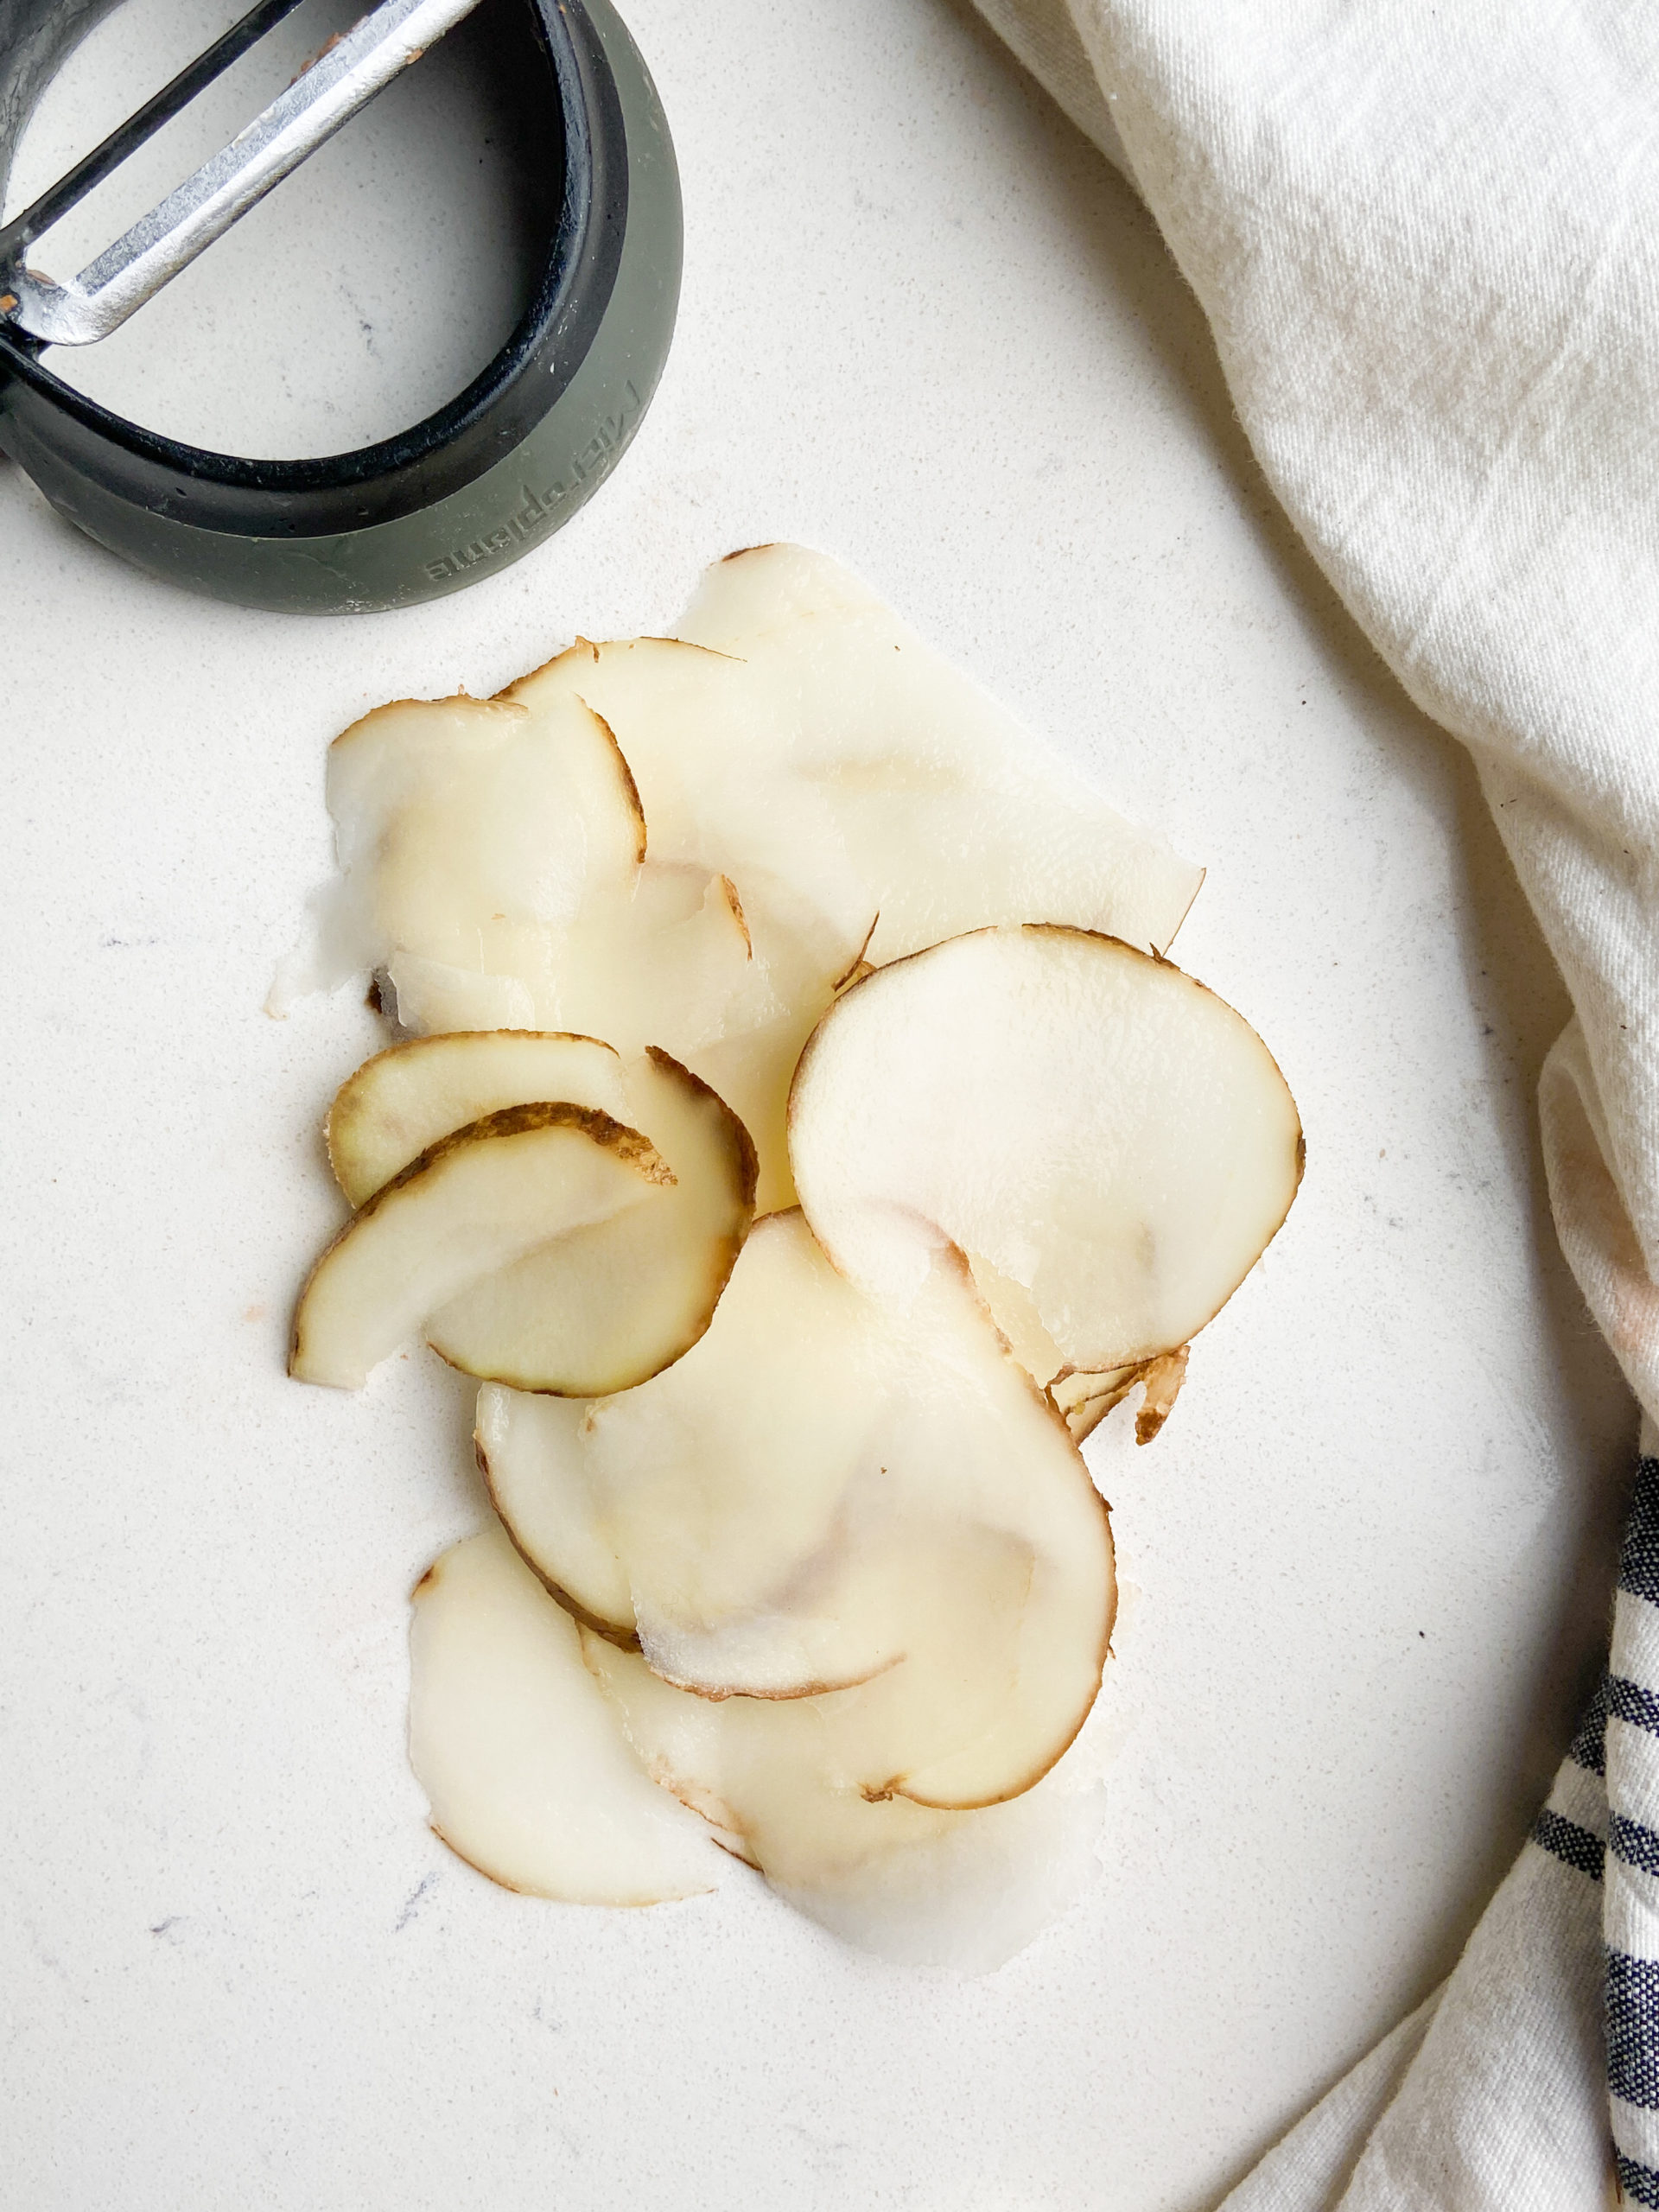 Potato slices cut with vegetable peeler. 